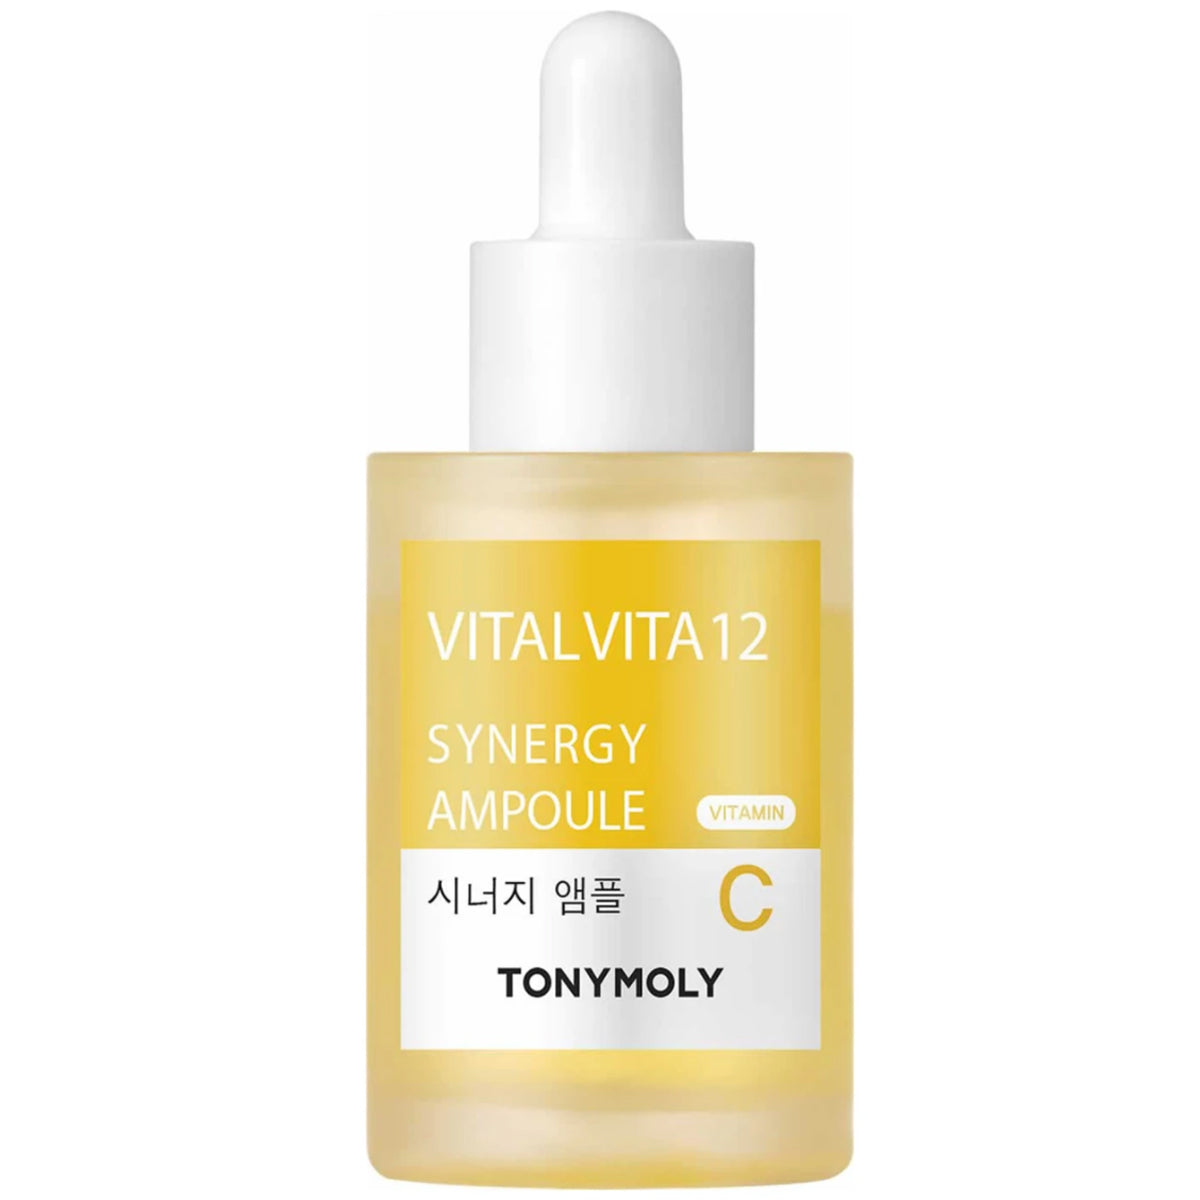 Tonymoly - Vital Vita 12 Synergy Ampoule - 30 ml